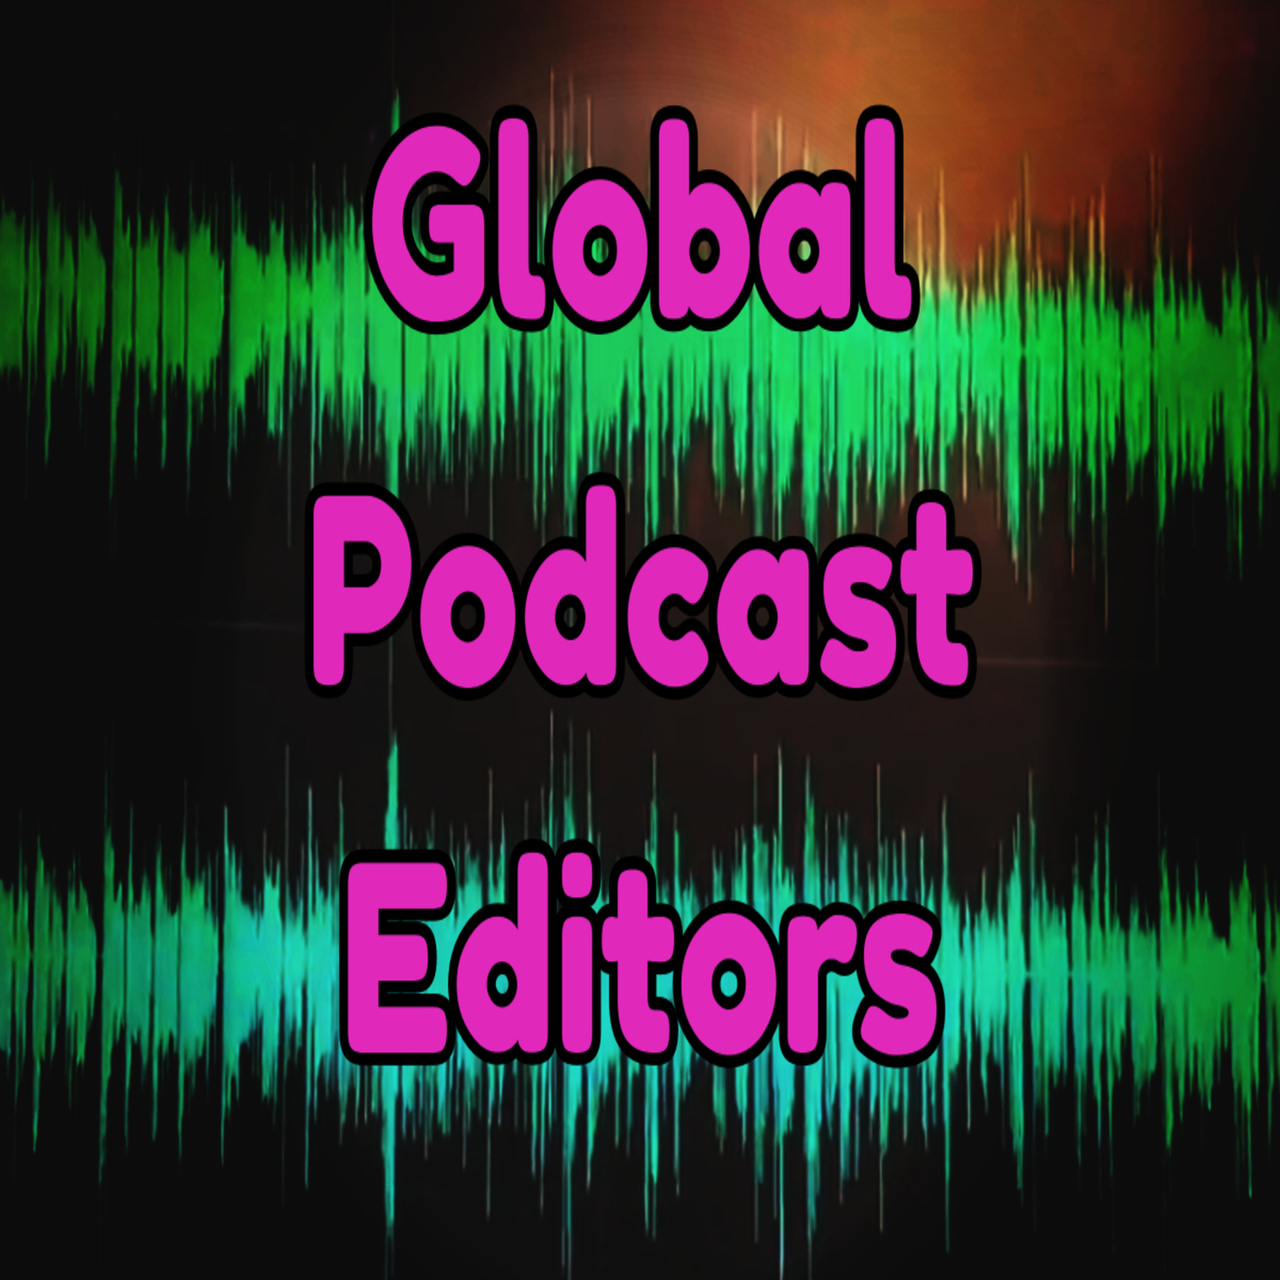 Global Podcast Editors